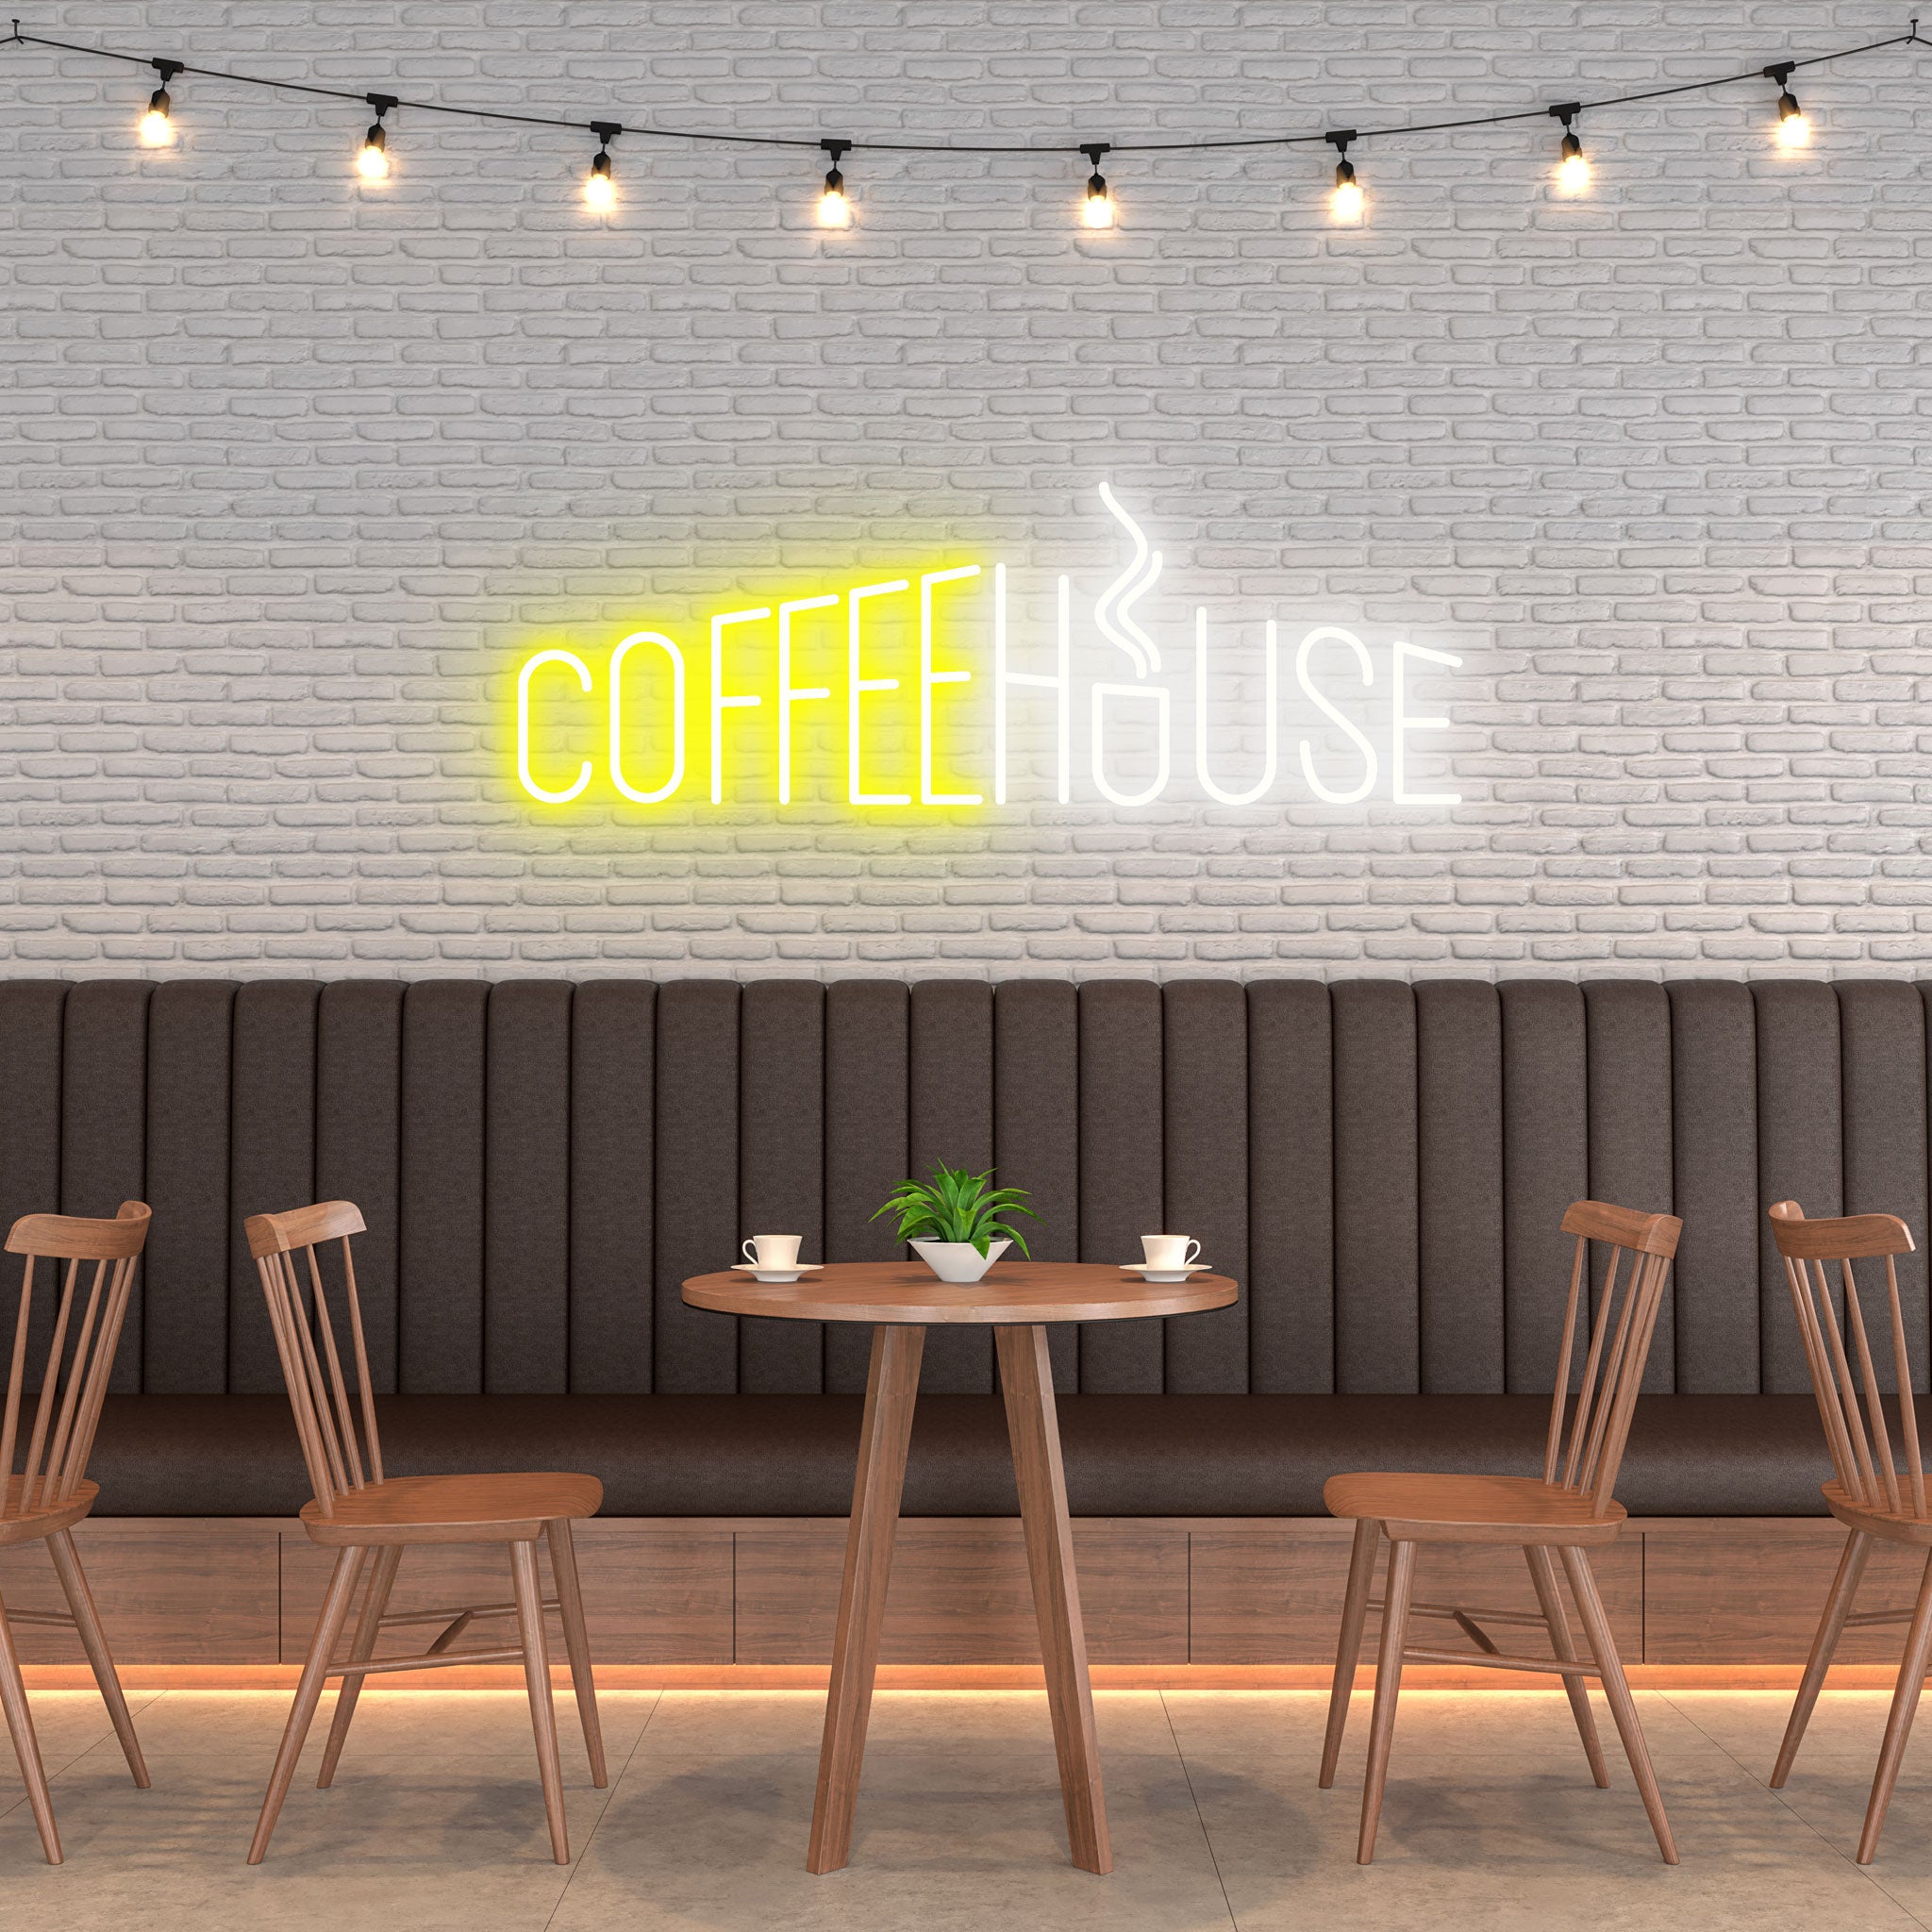 Coffee House - Neon Sign - Café Venue